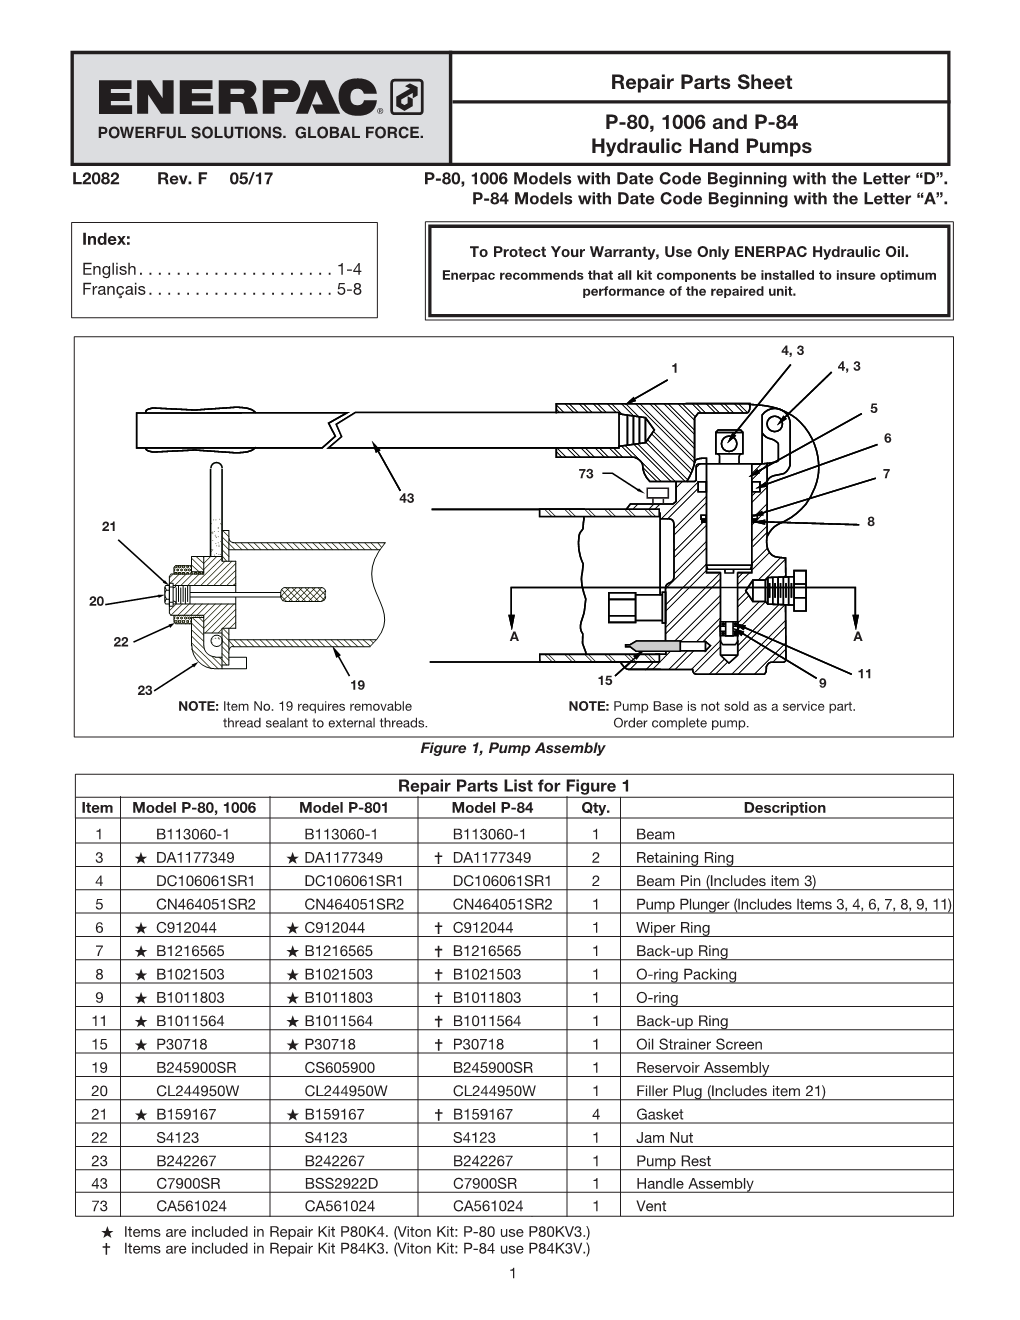 Repair Parts Sheet P-80, 1006 and P-84 Hydraulic Hand